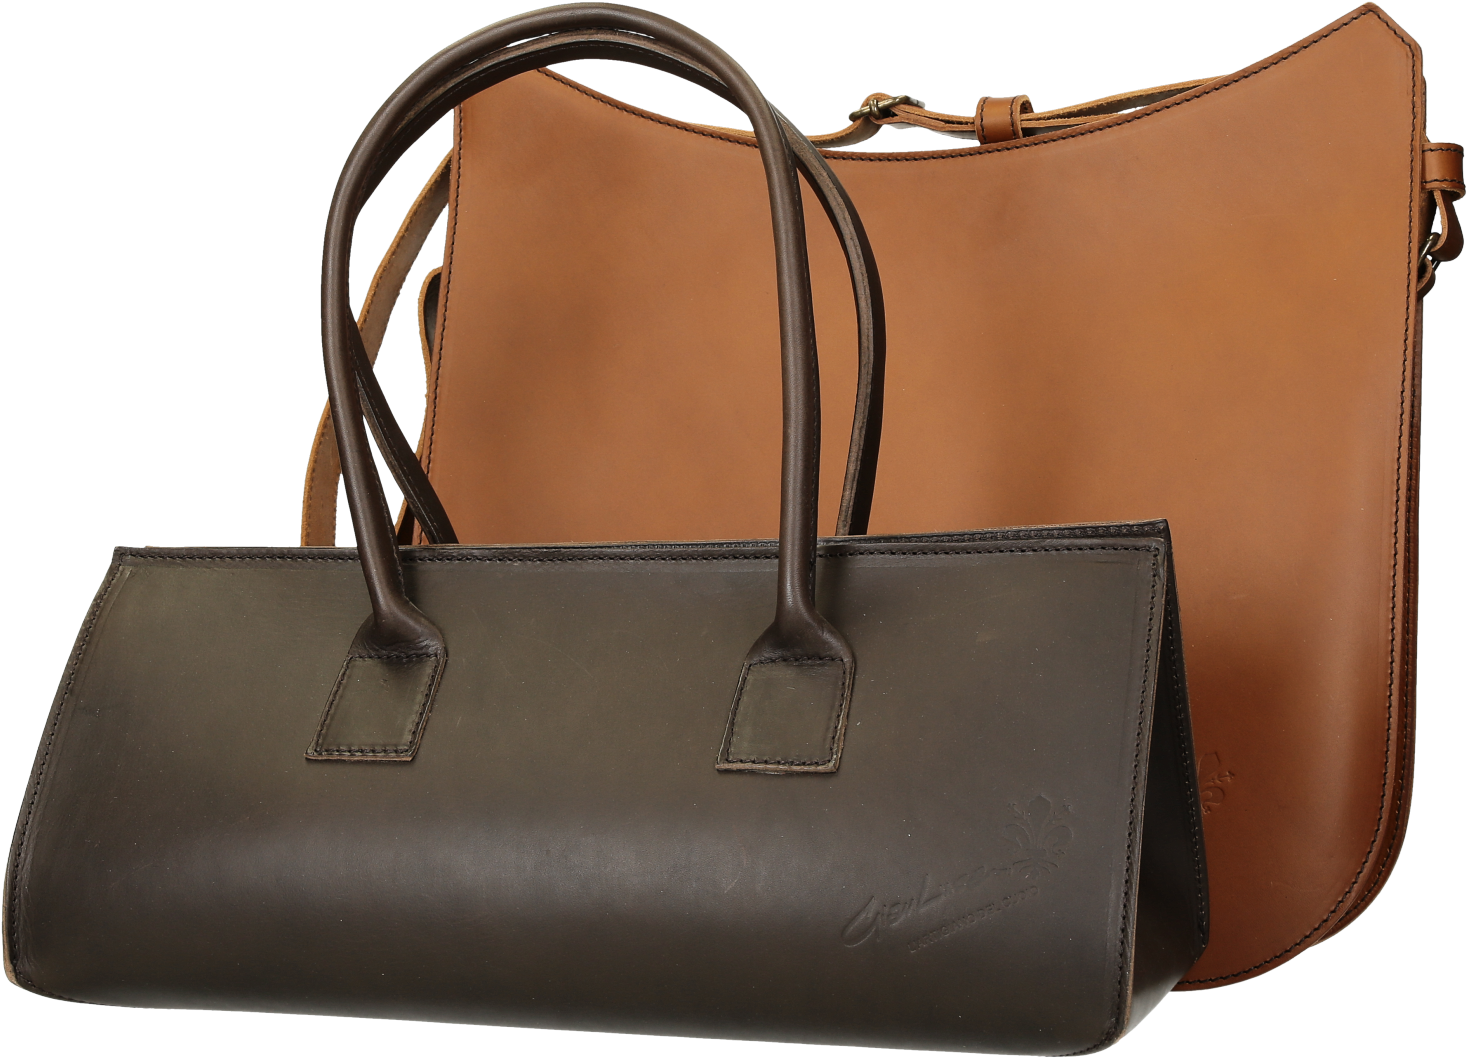 Brown Leather Handbag PNG Photos